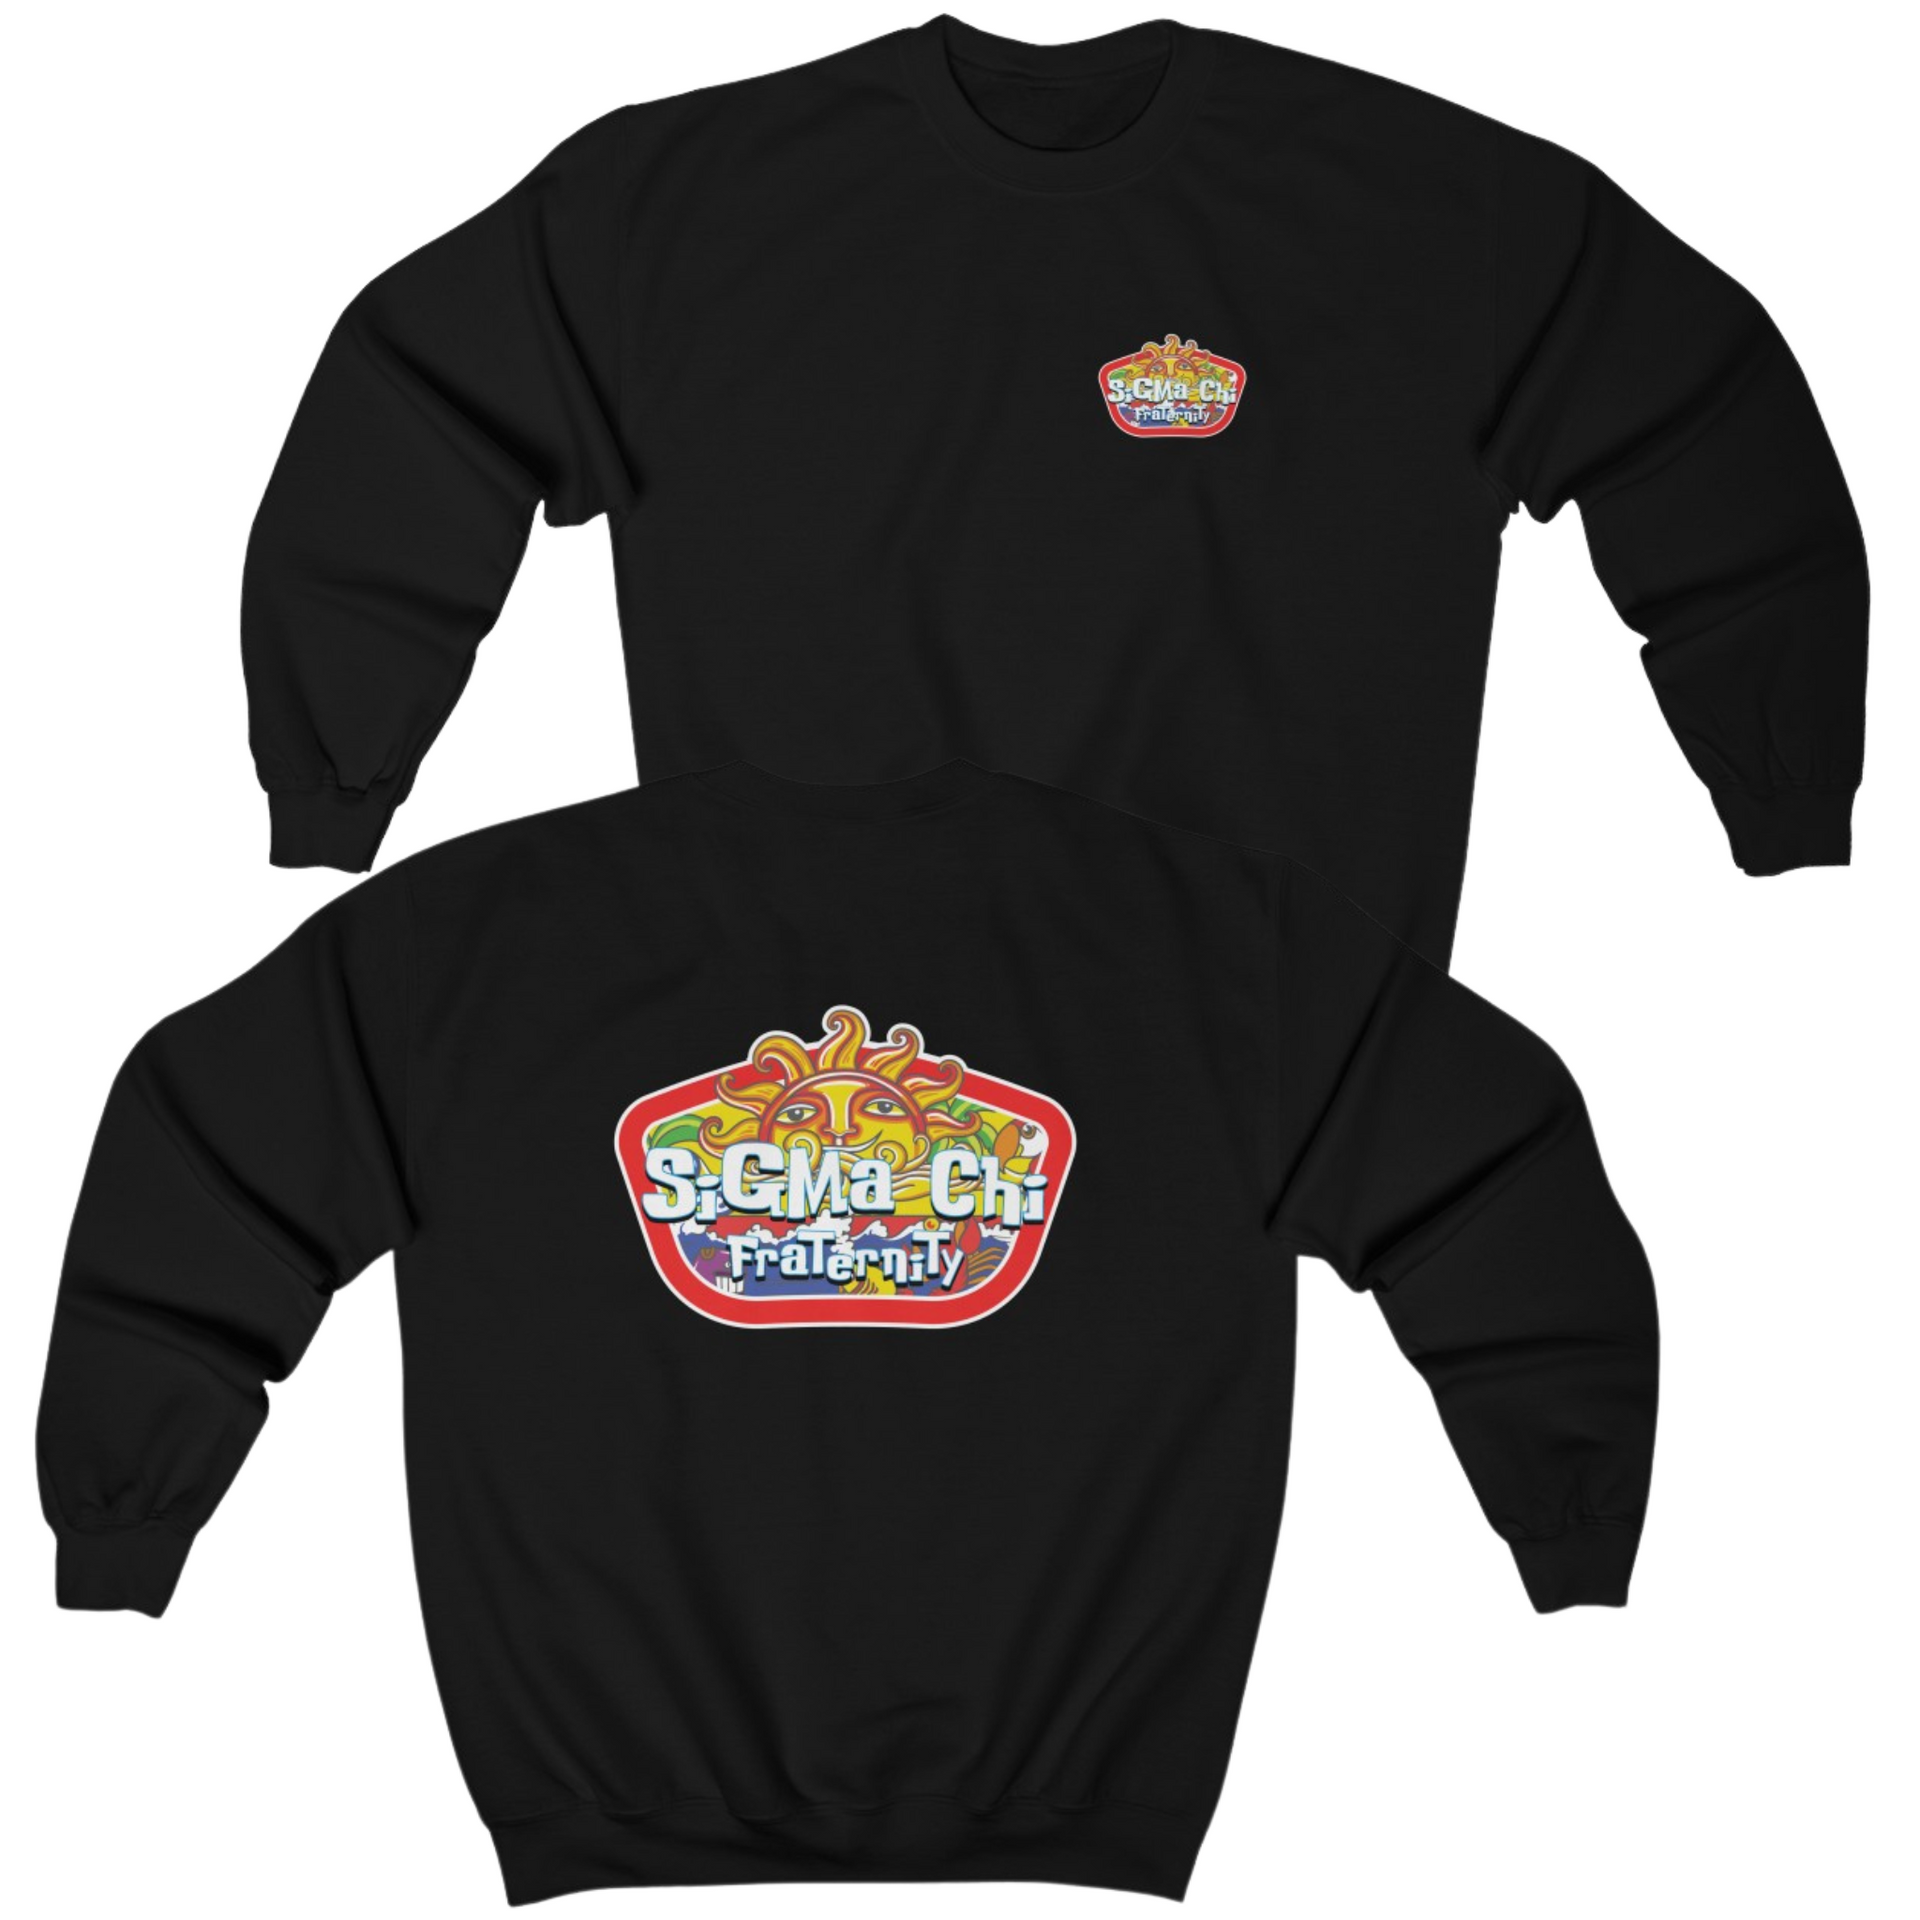 Black Sigma Chi Graphic Crewneck Sweatshirt | Summer Sol | Sigma Chi Fraternity Merch House